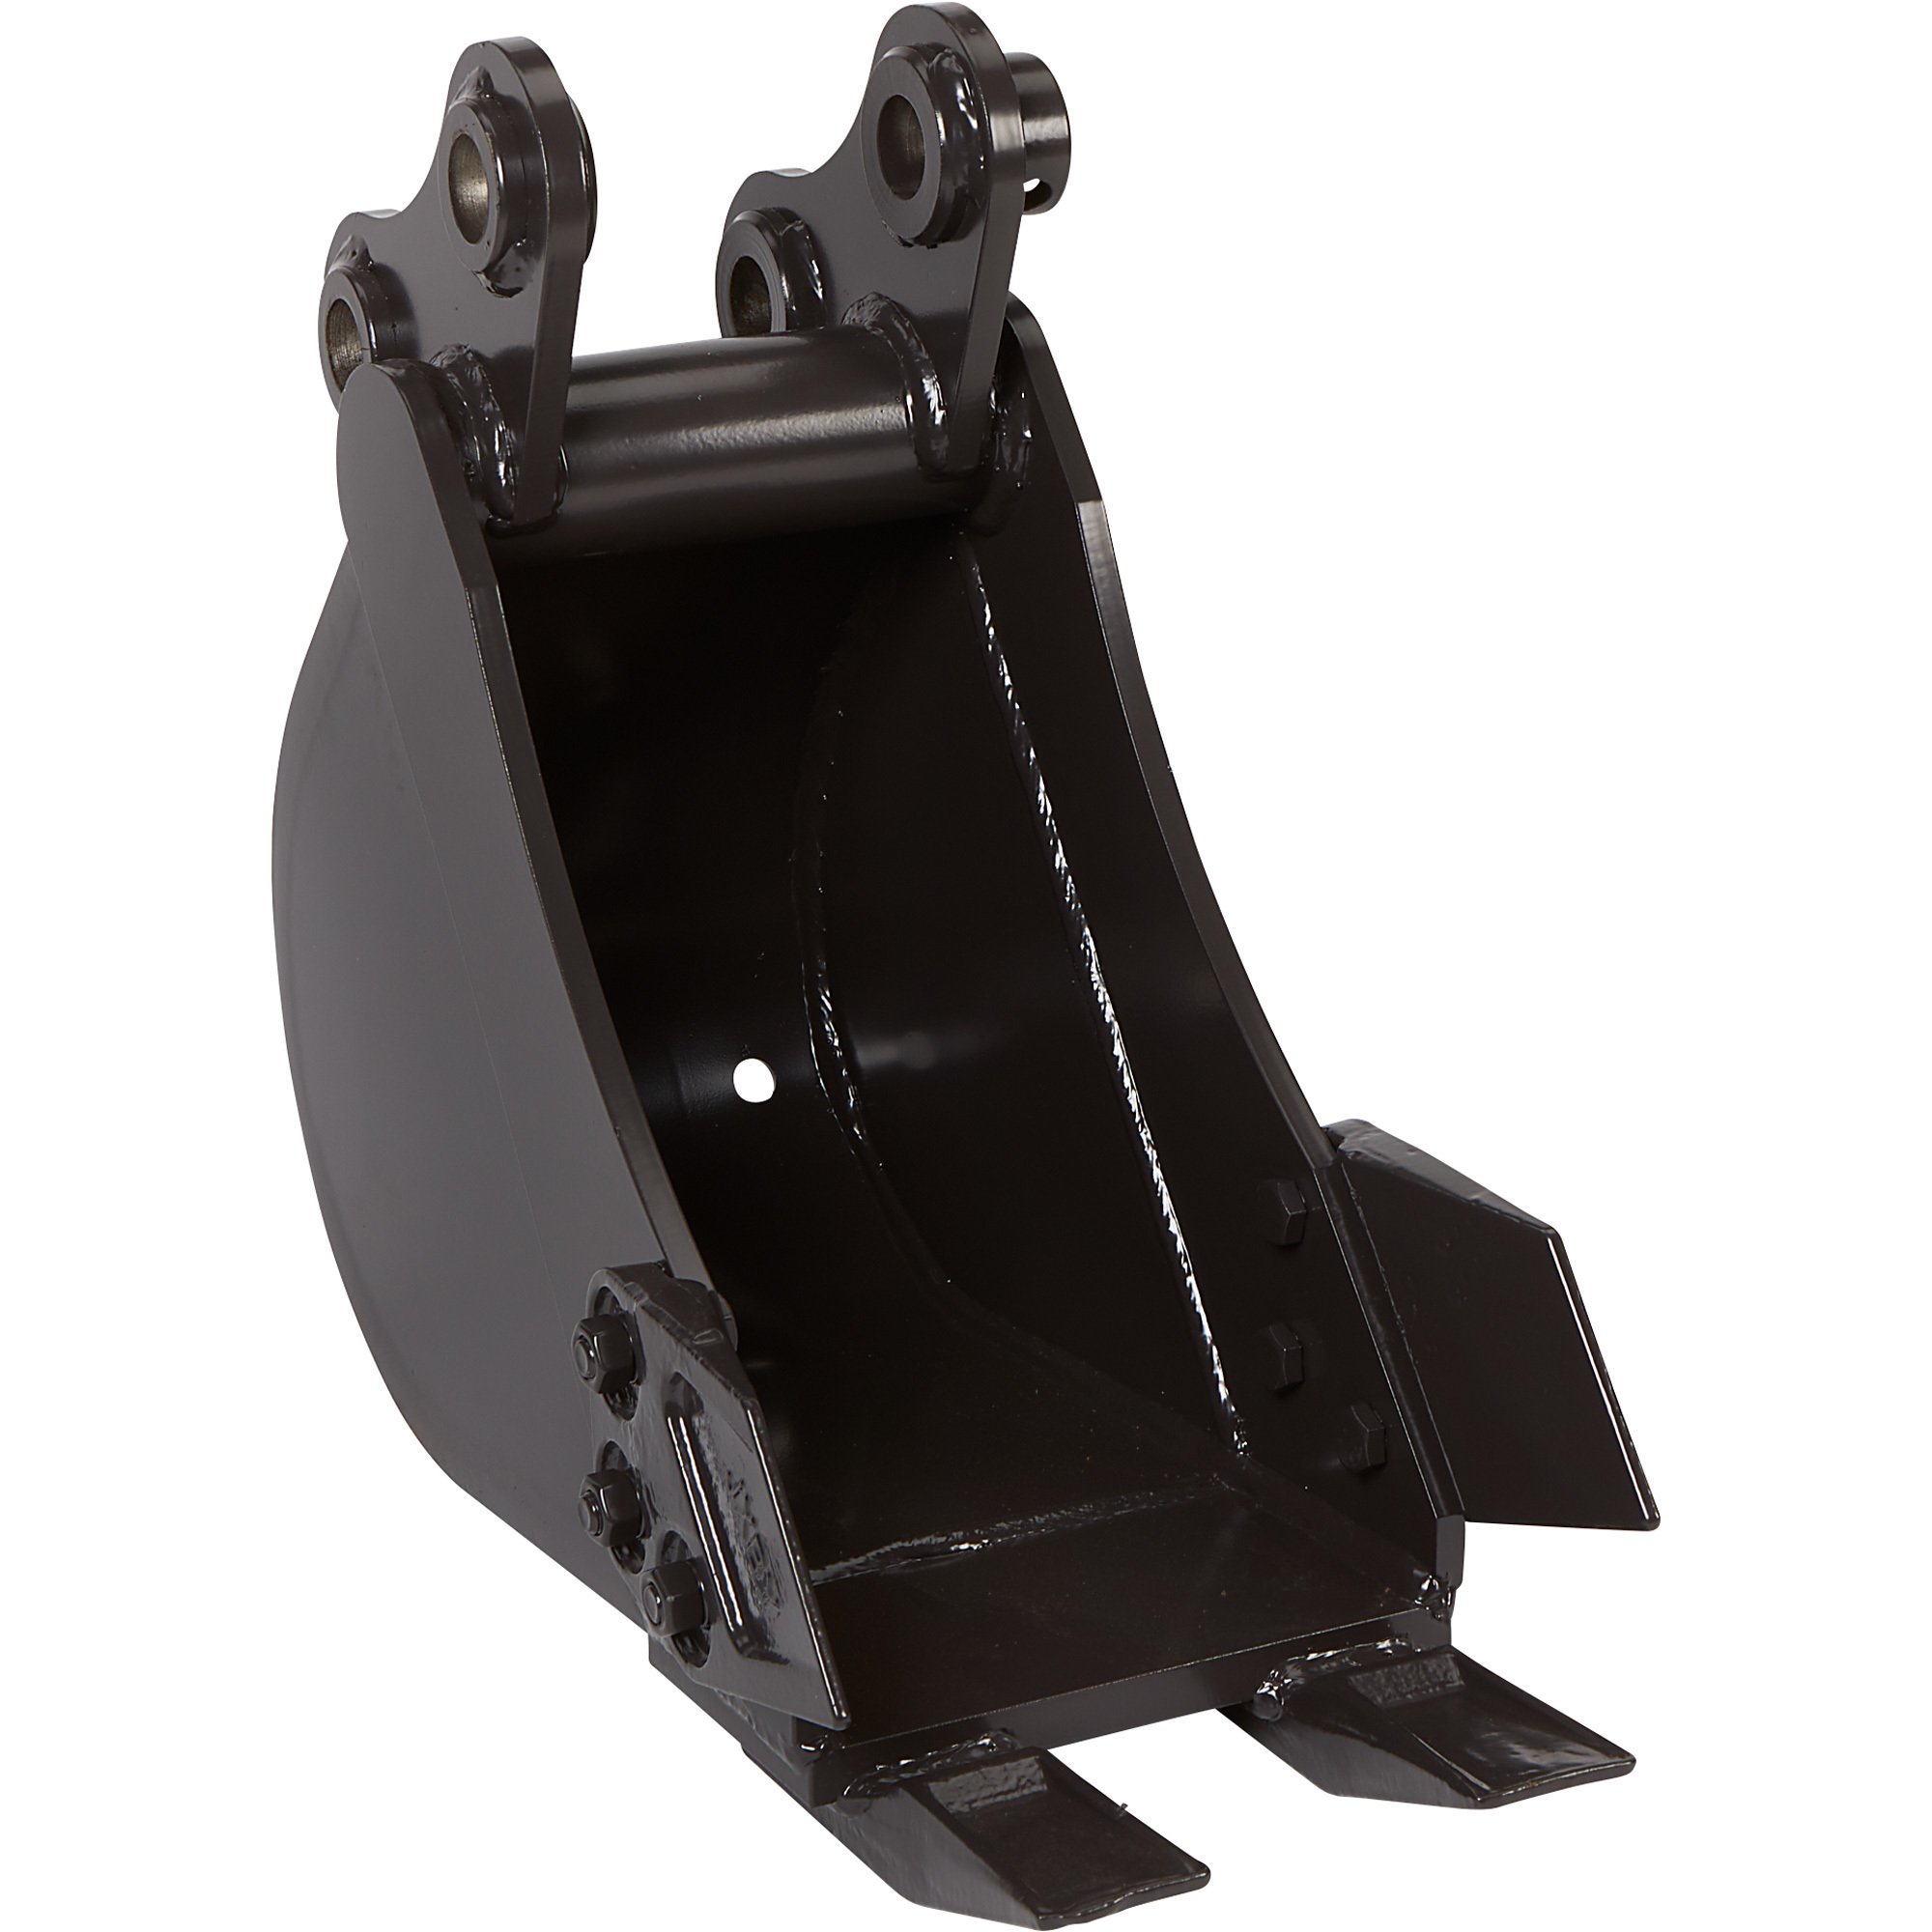 NorTrac Narrow Bucket Attachment for Mini Excavator Item# 1111419, 352-Lb. Capacity